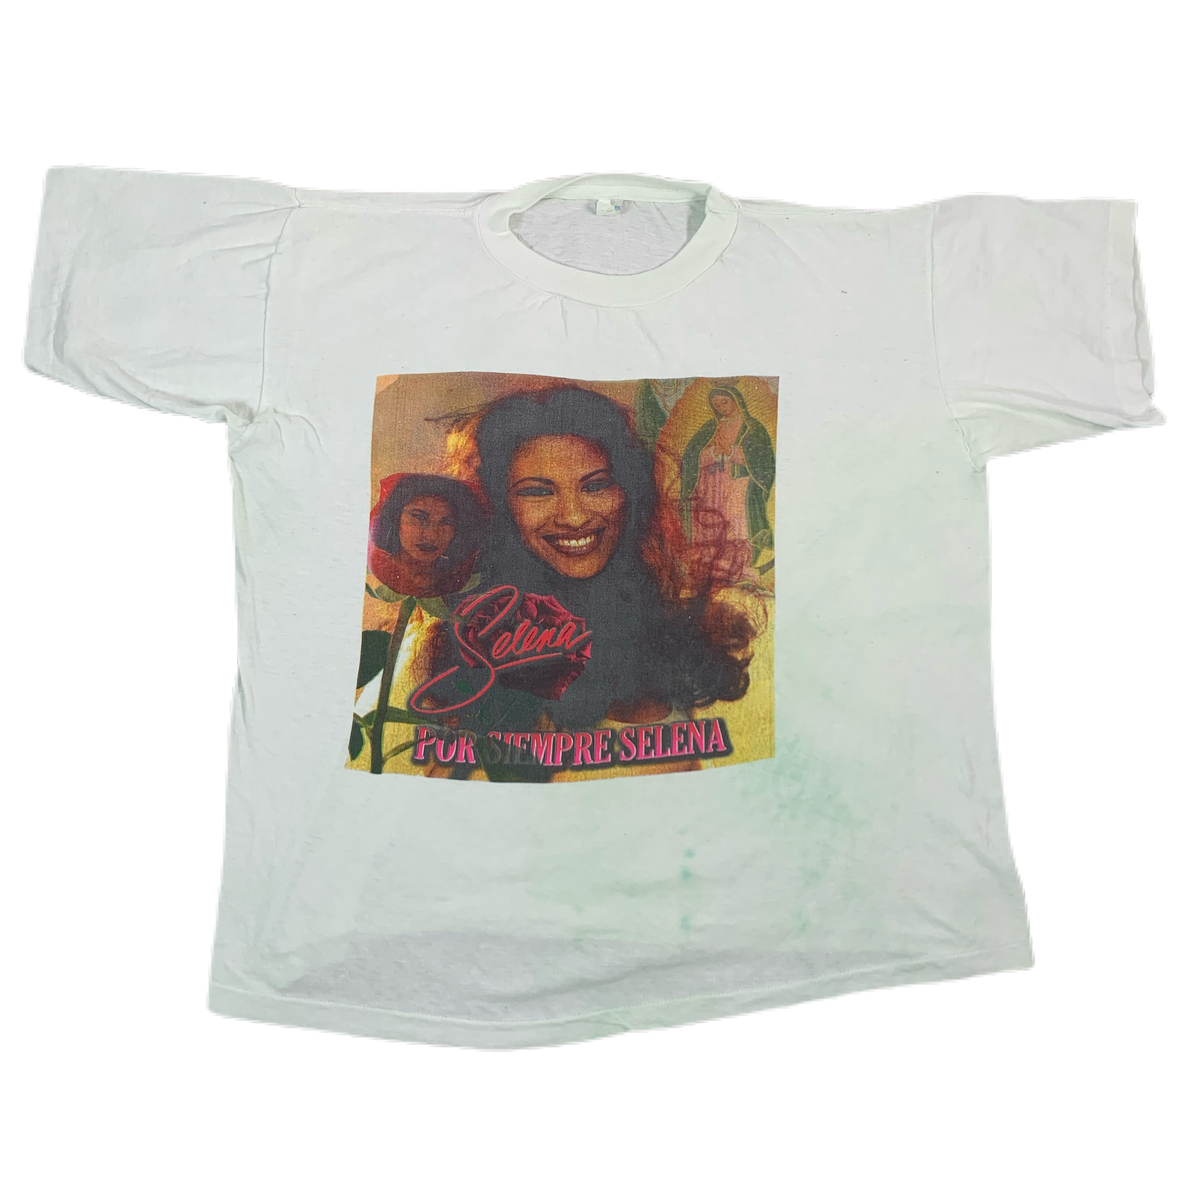 Vintage Selena “Por Siempre” T-Shirt - jointcustodydc